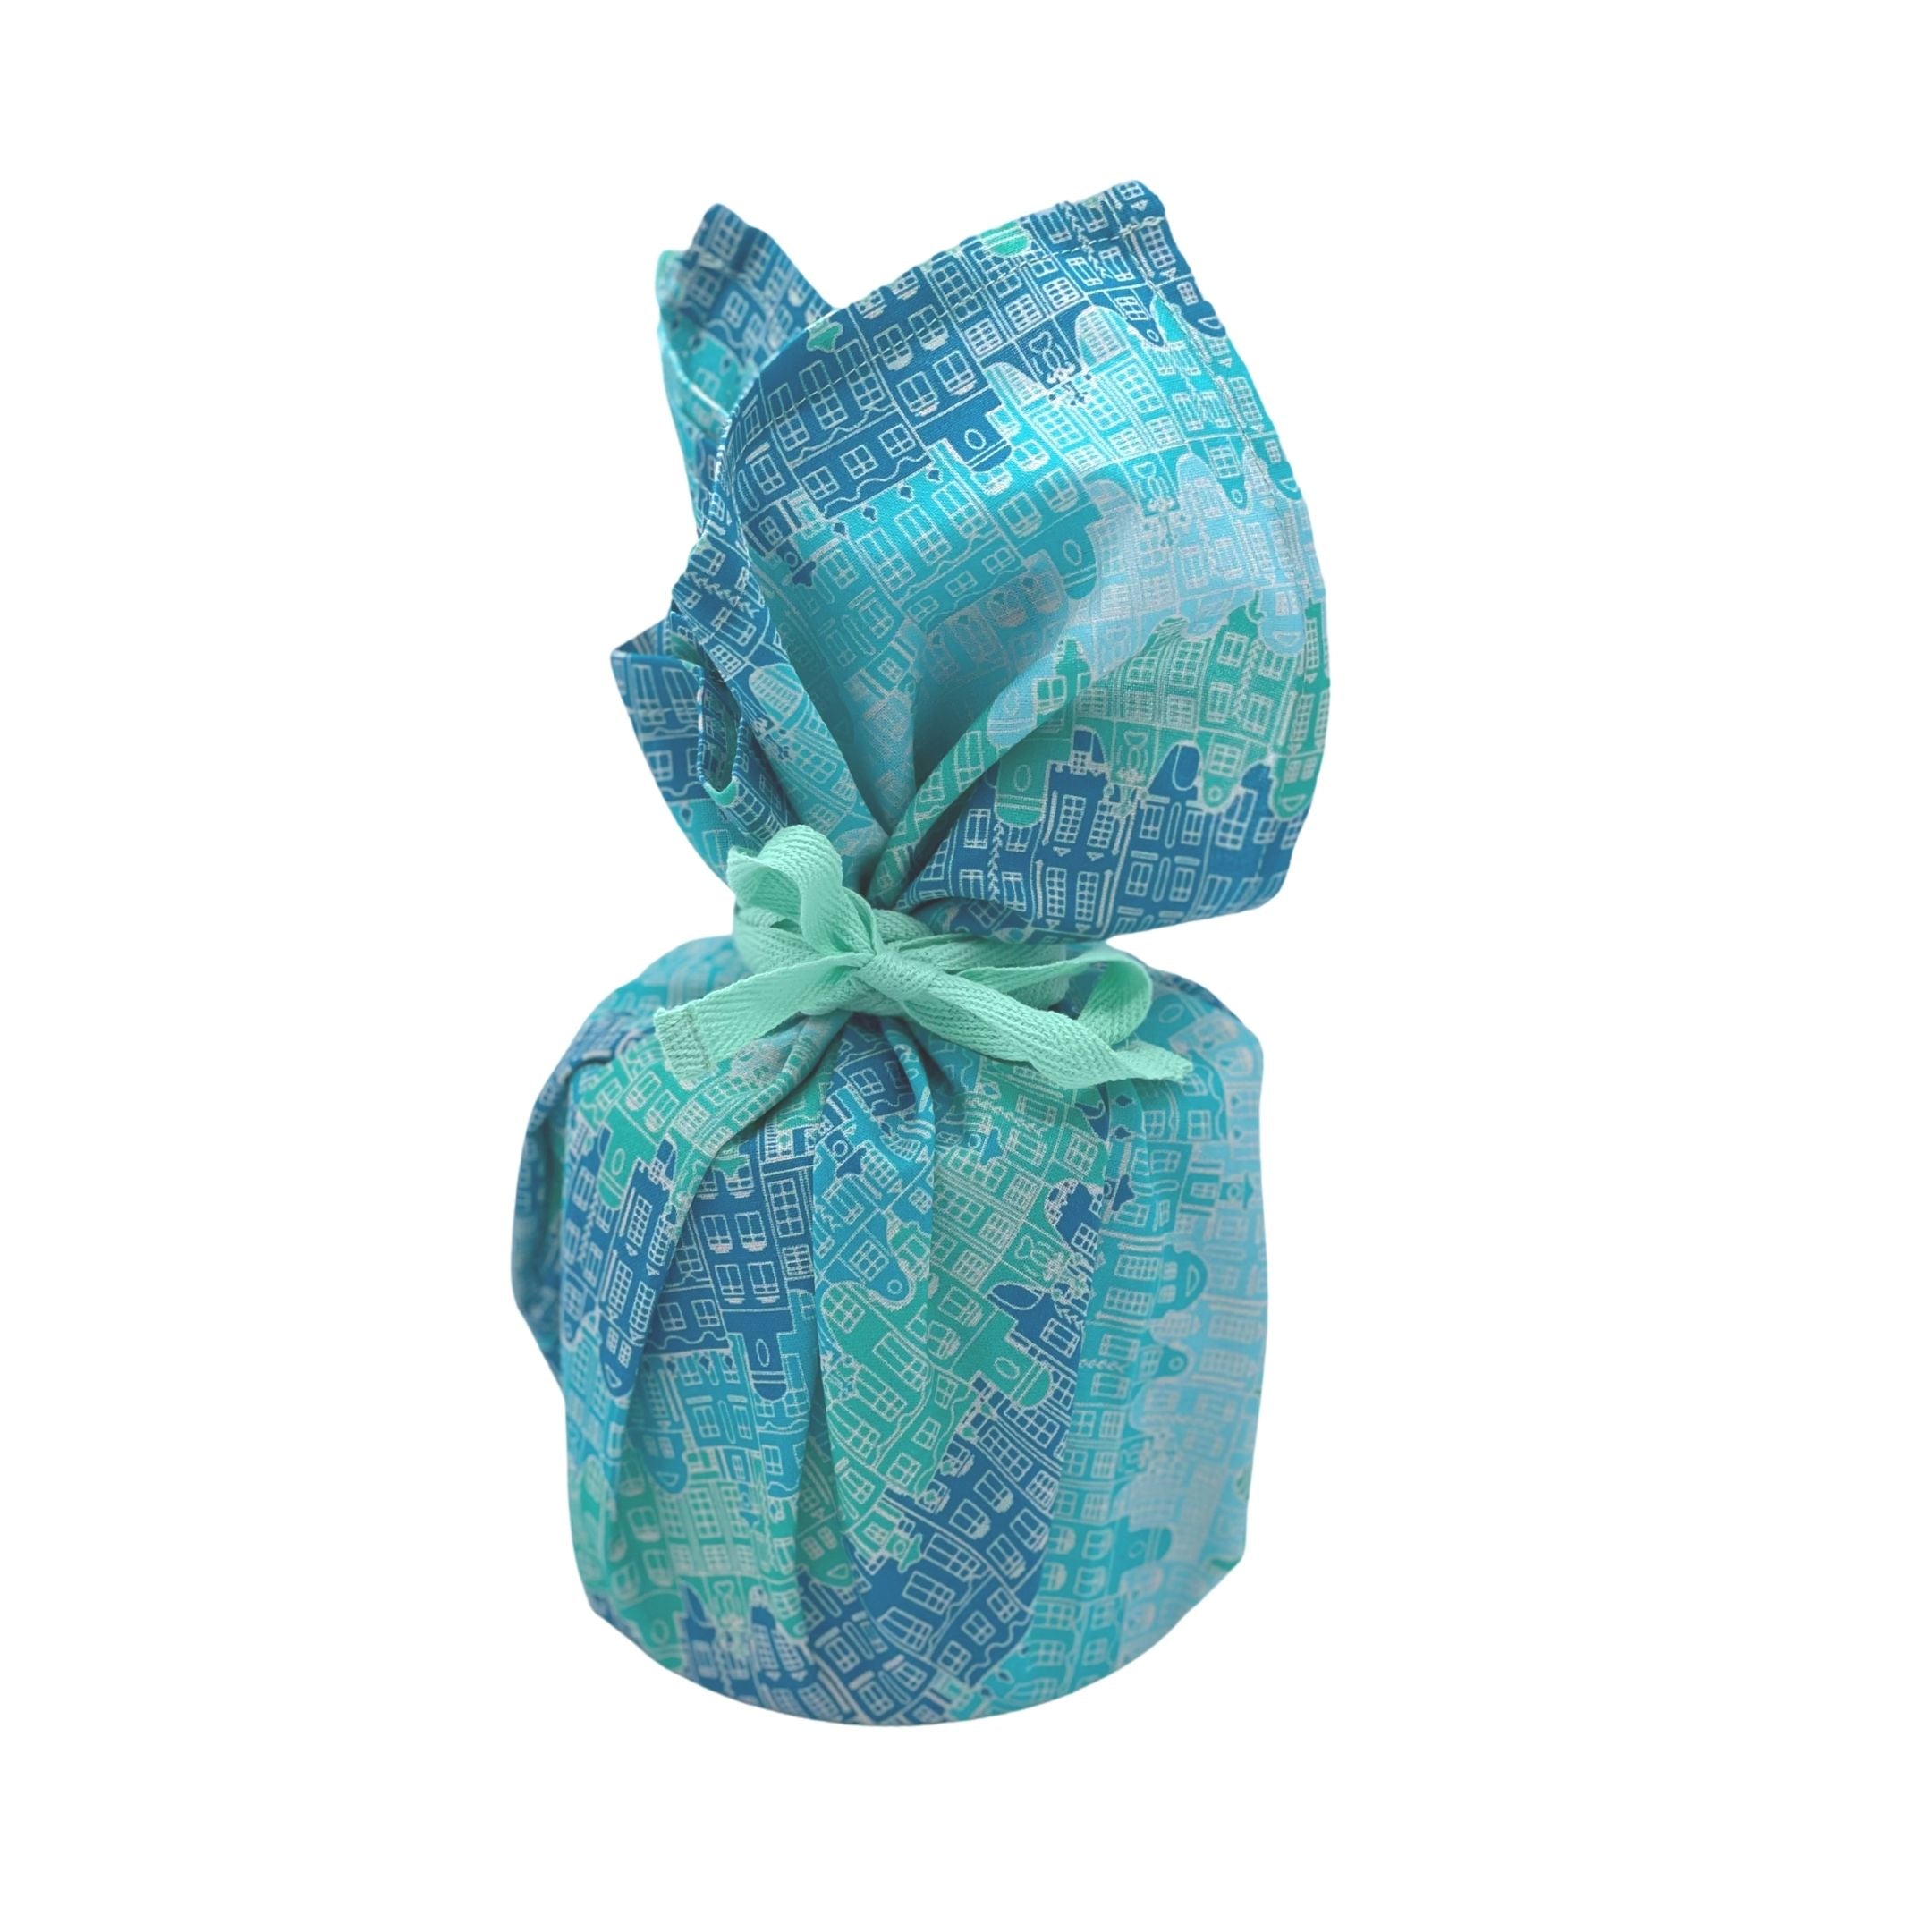 Fabric Gift Wrap